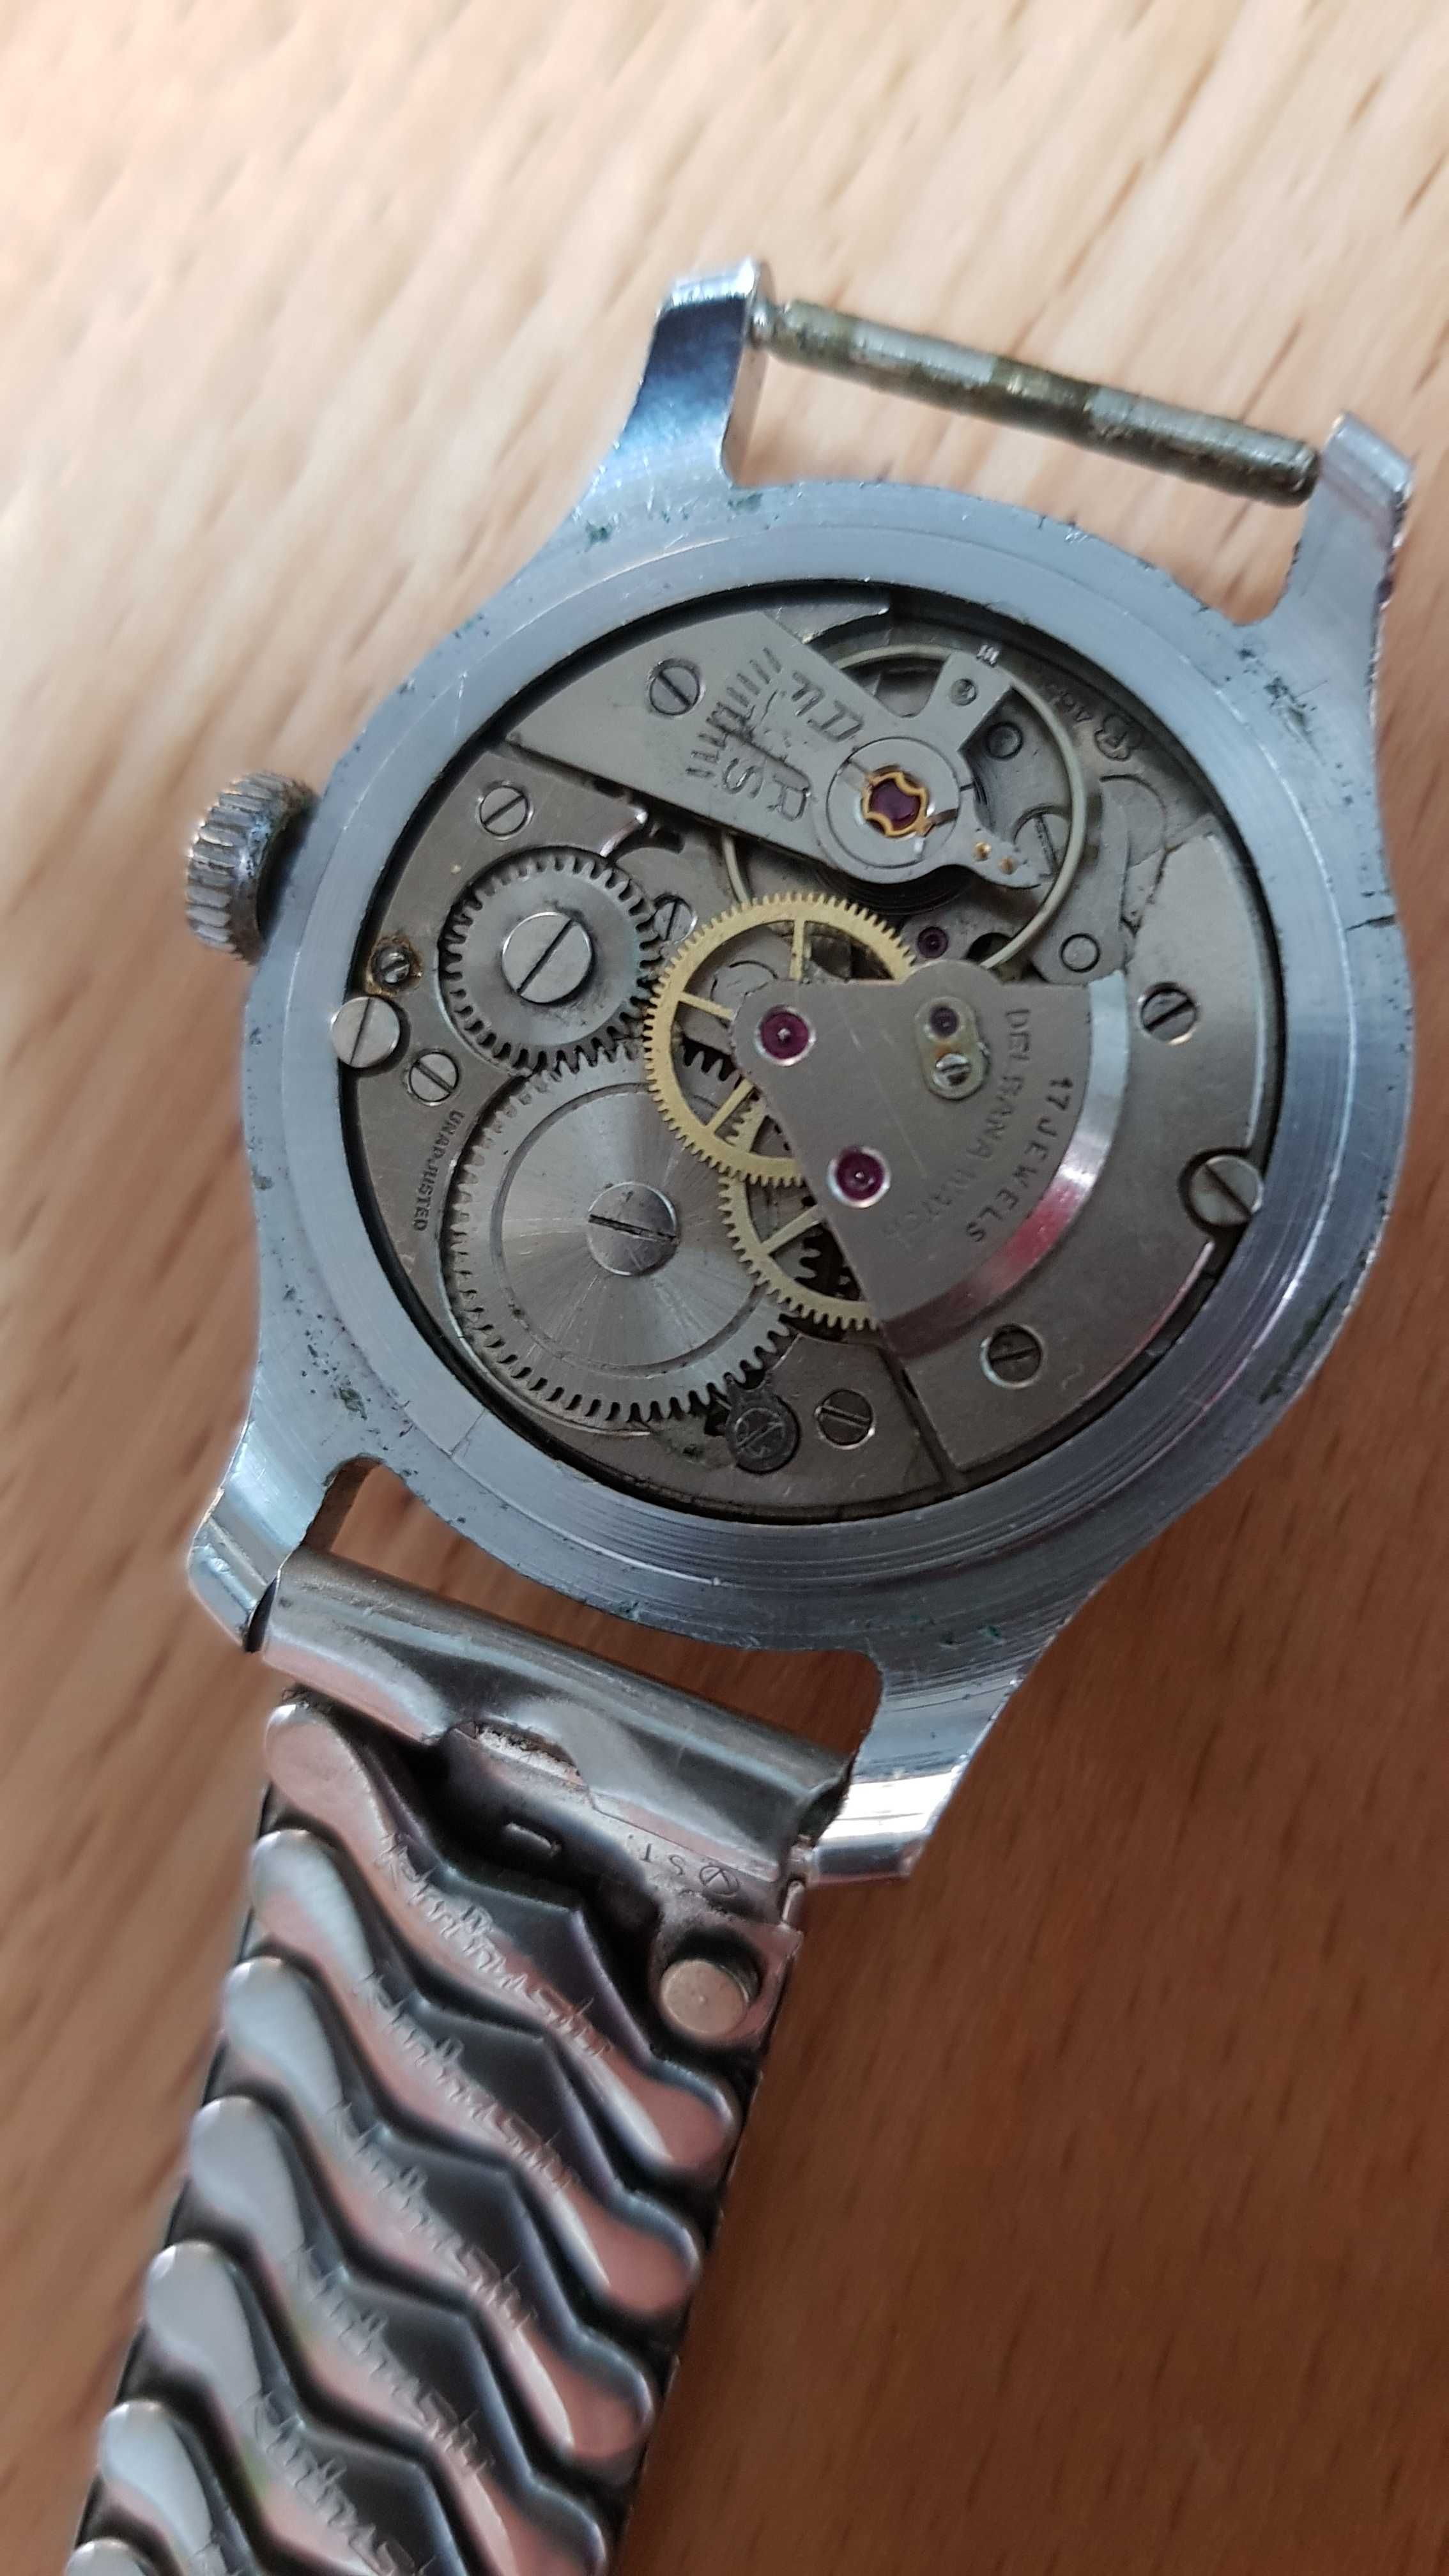 Stary zegarek *Pallas* mechanizm Delbana 1958r